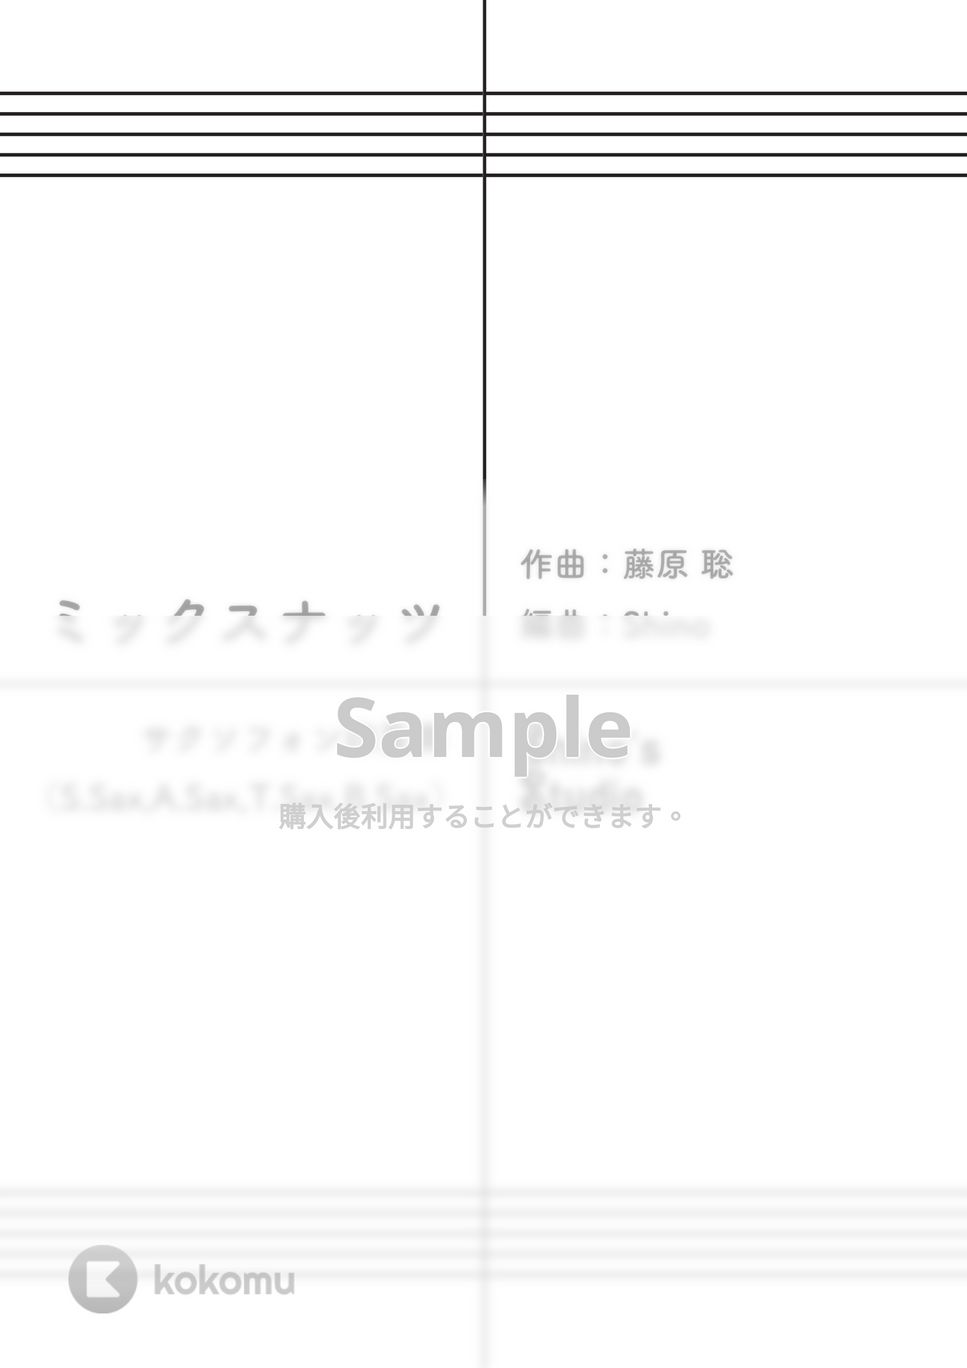 Official髭男dism - 【サックス四重奏】ミックスナッツ キー-1【特典盤】 by Shino